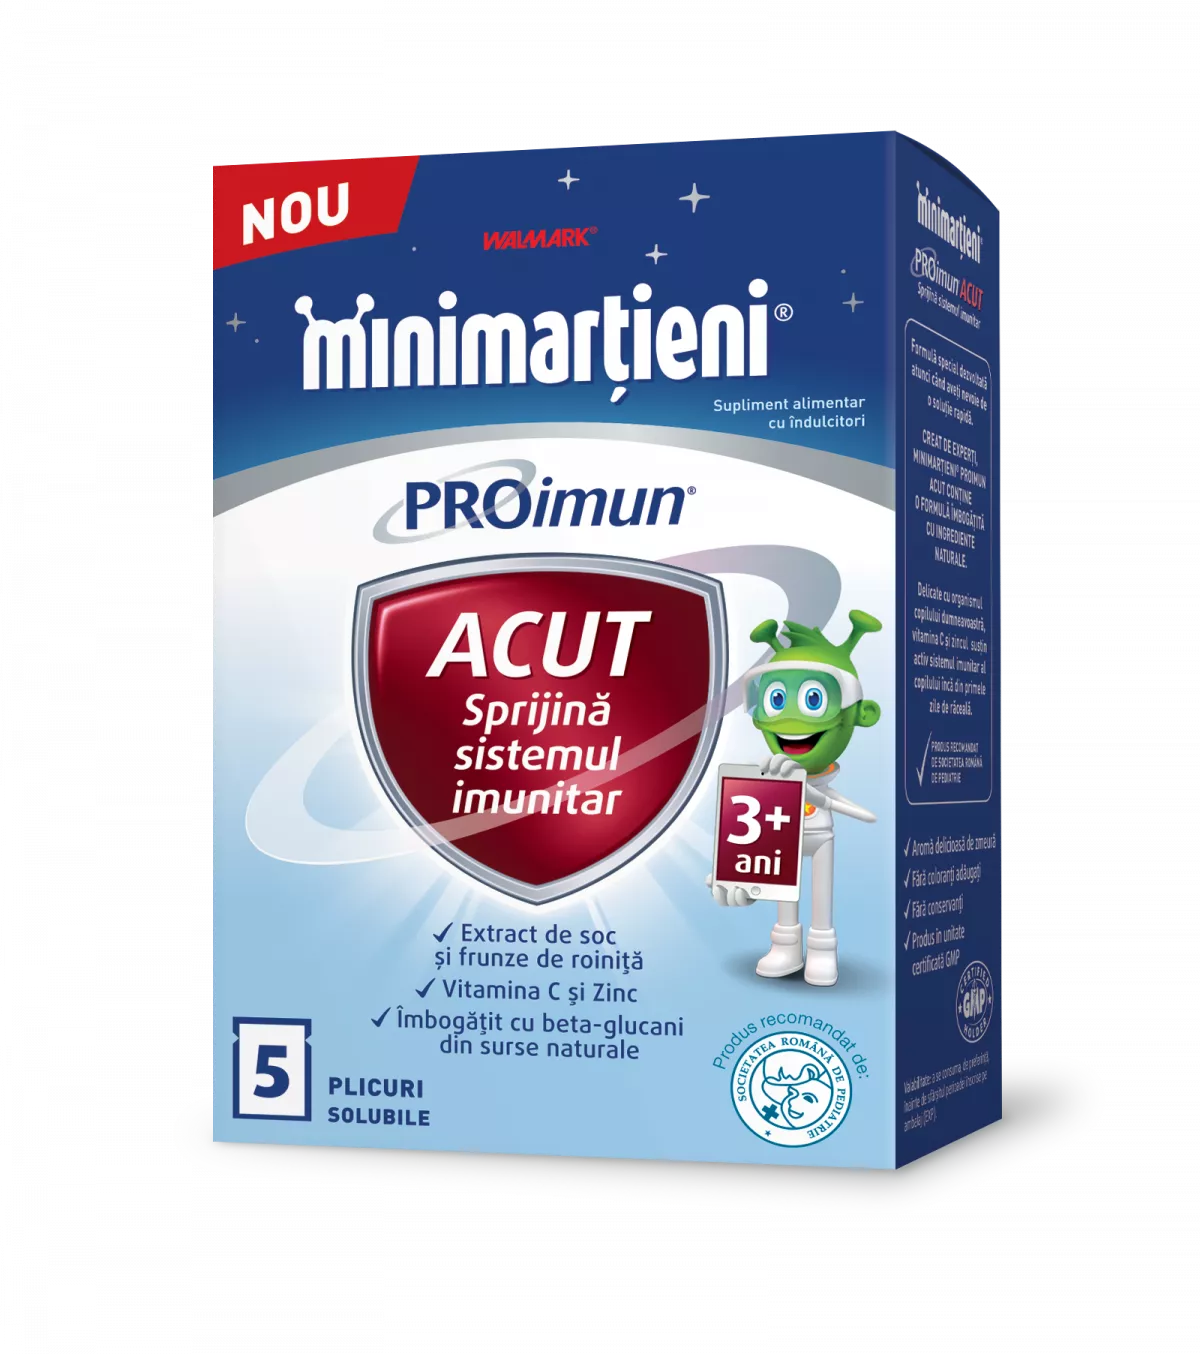 Minimartieni PROimun Acut 3+ ani, 5 plicuri, Walmark, [],remediumfarm.ro